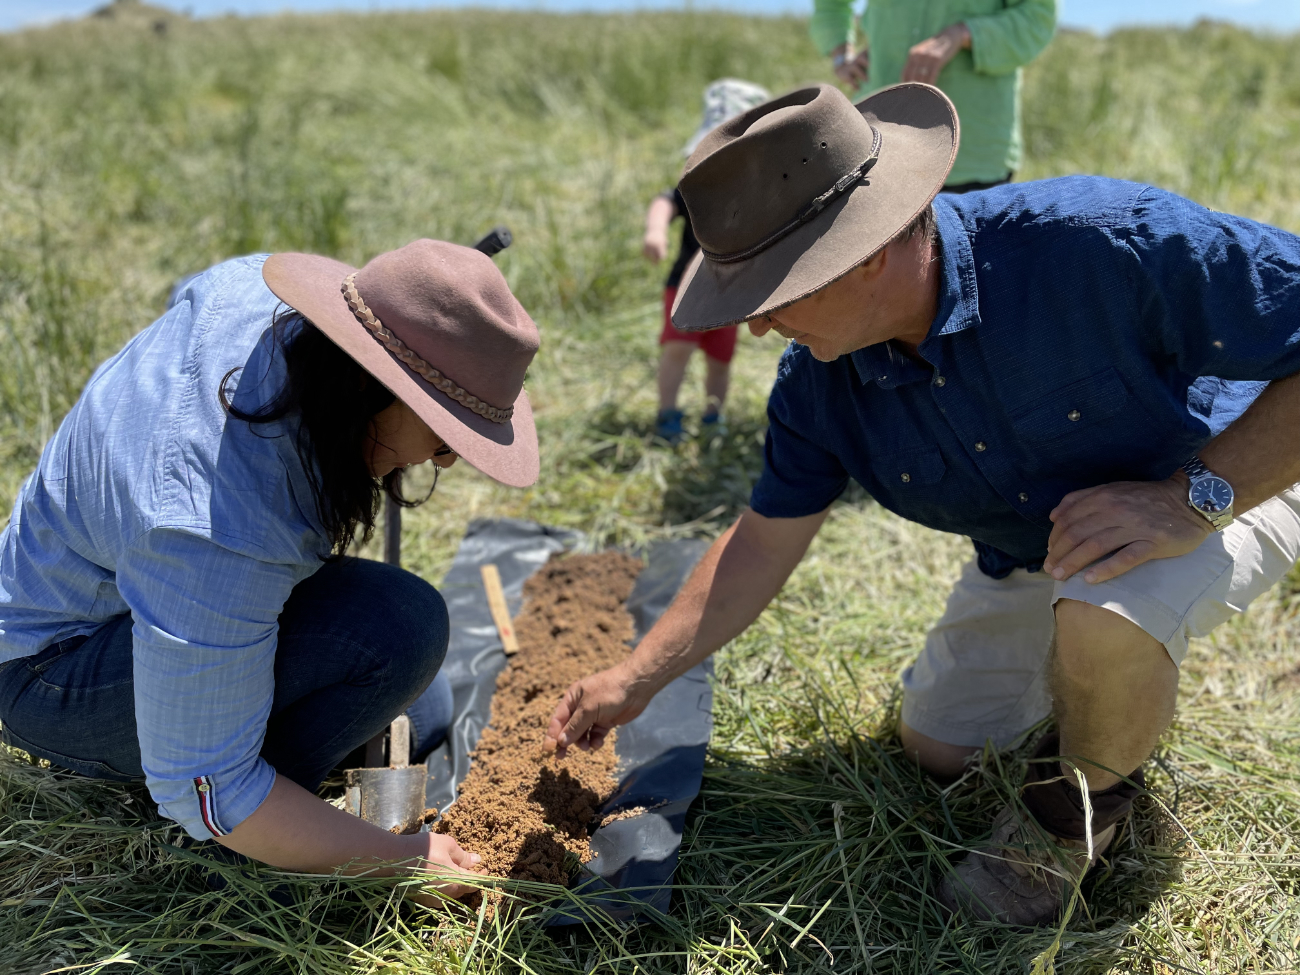 John Lilleyman inspecting a soil sample with Soils for Life's Daniela Carnovale